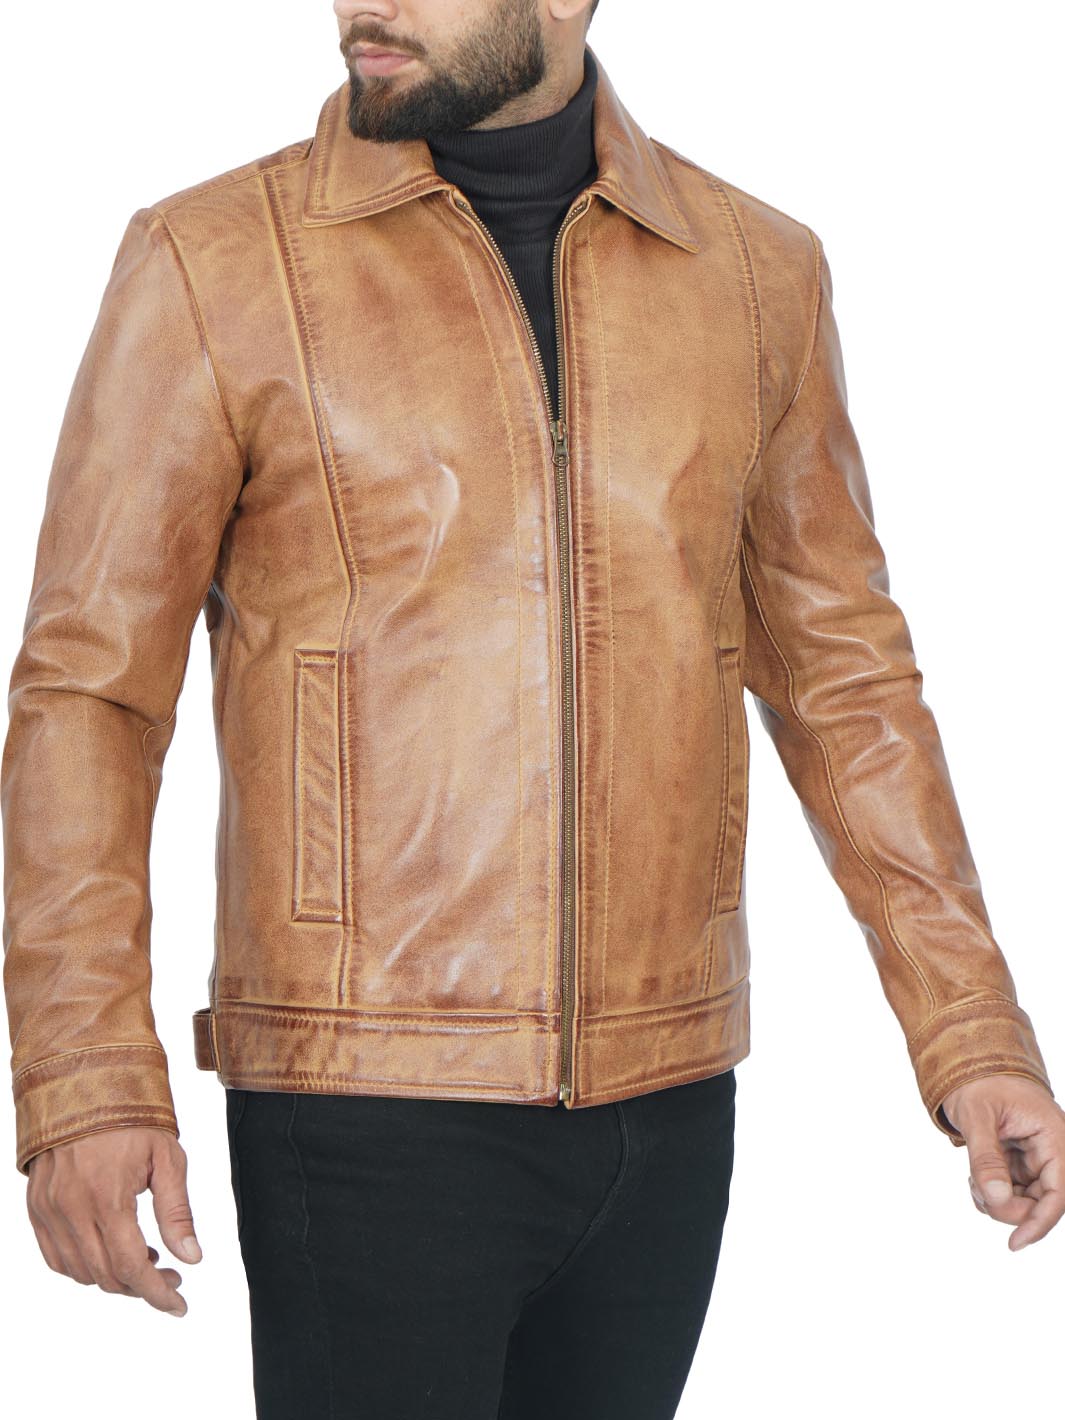 John Wick Camel Brown Leather Jacket